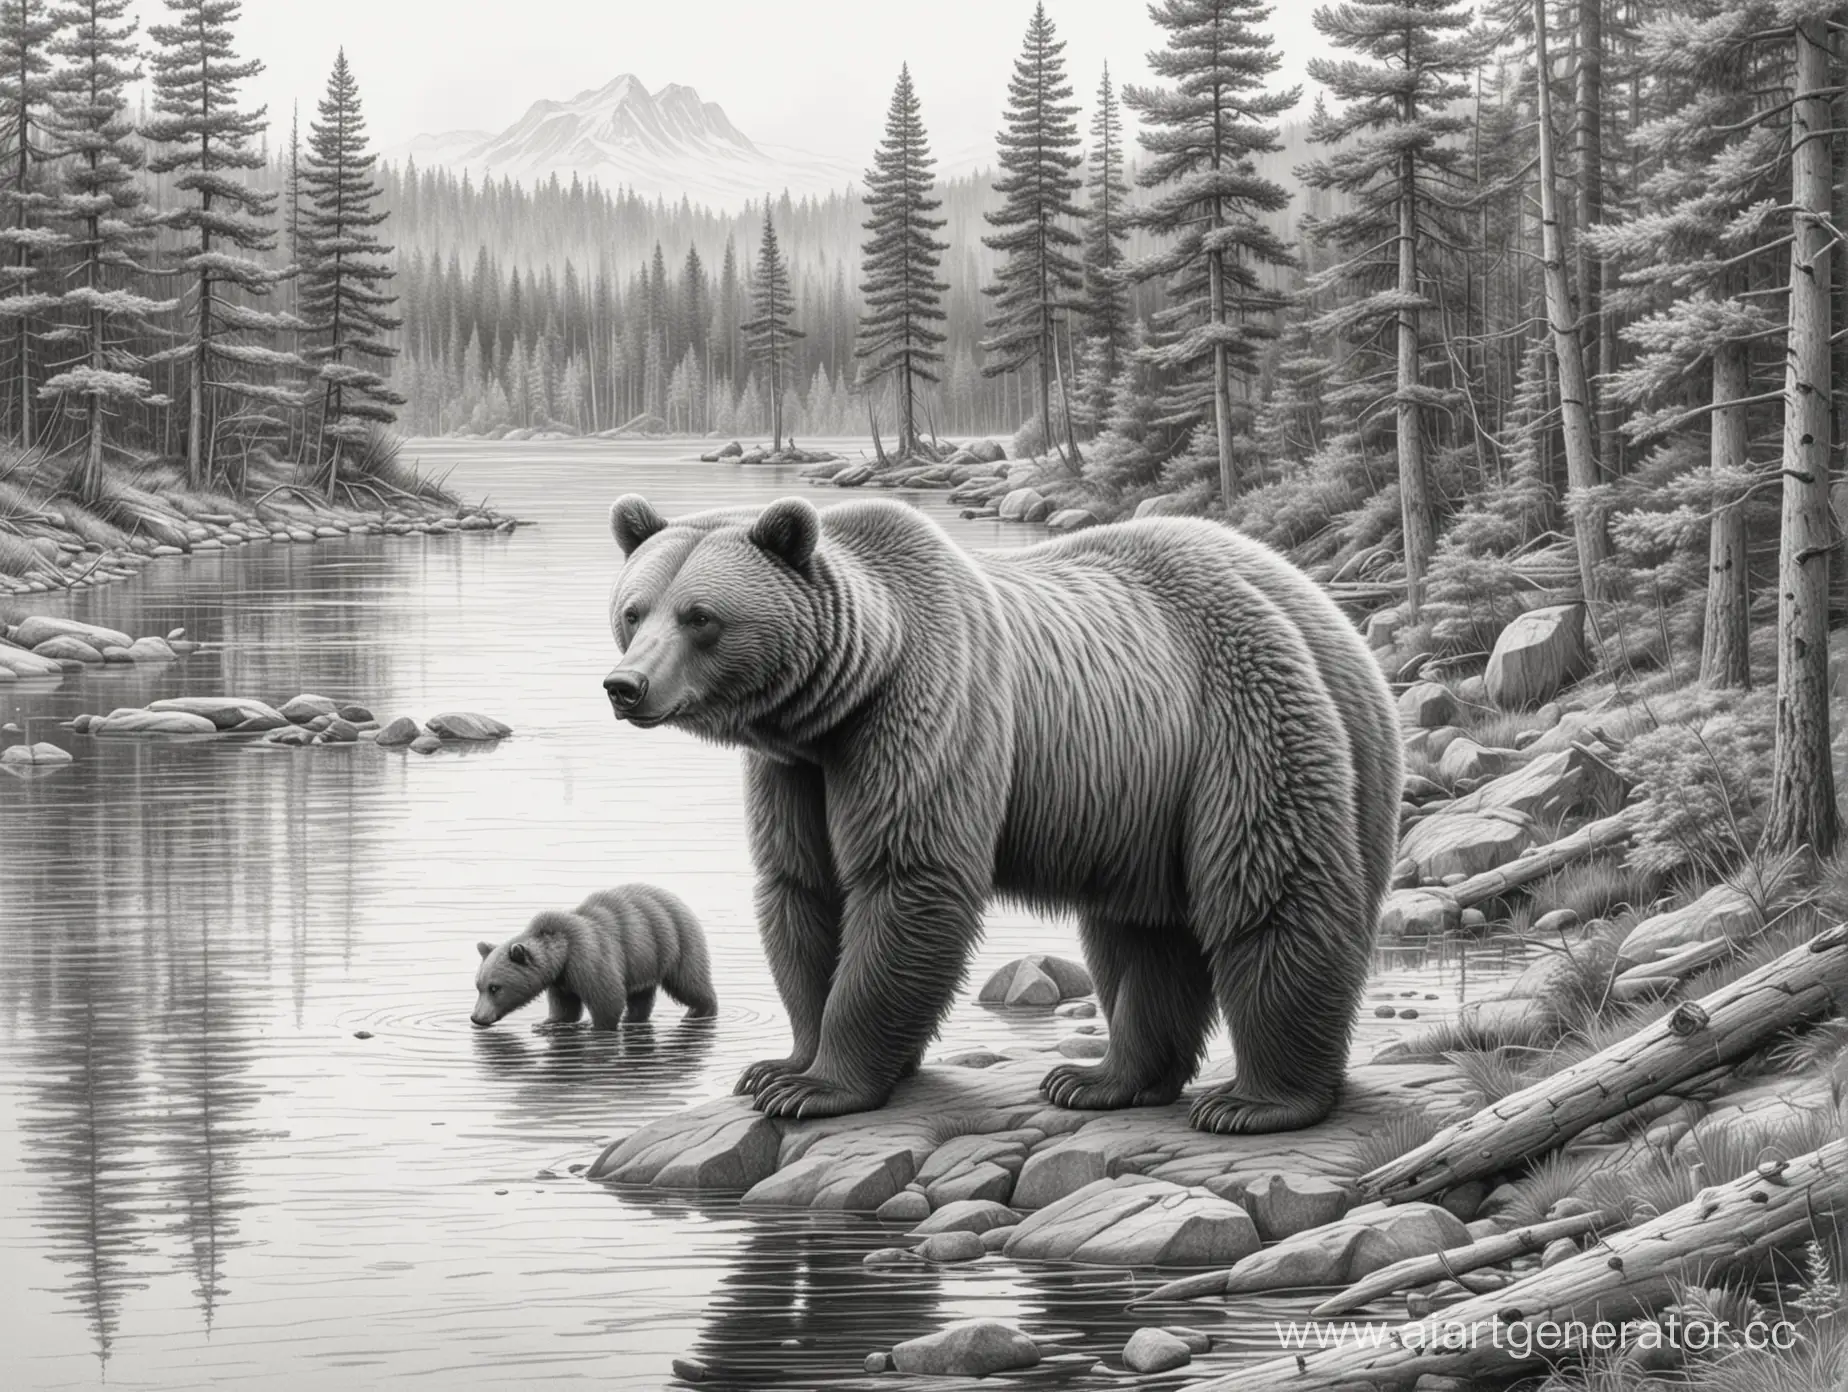 Realistic-Pencil-Drawing-of-Bear-and-Cub-by-Lake-Shore